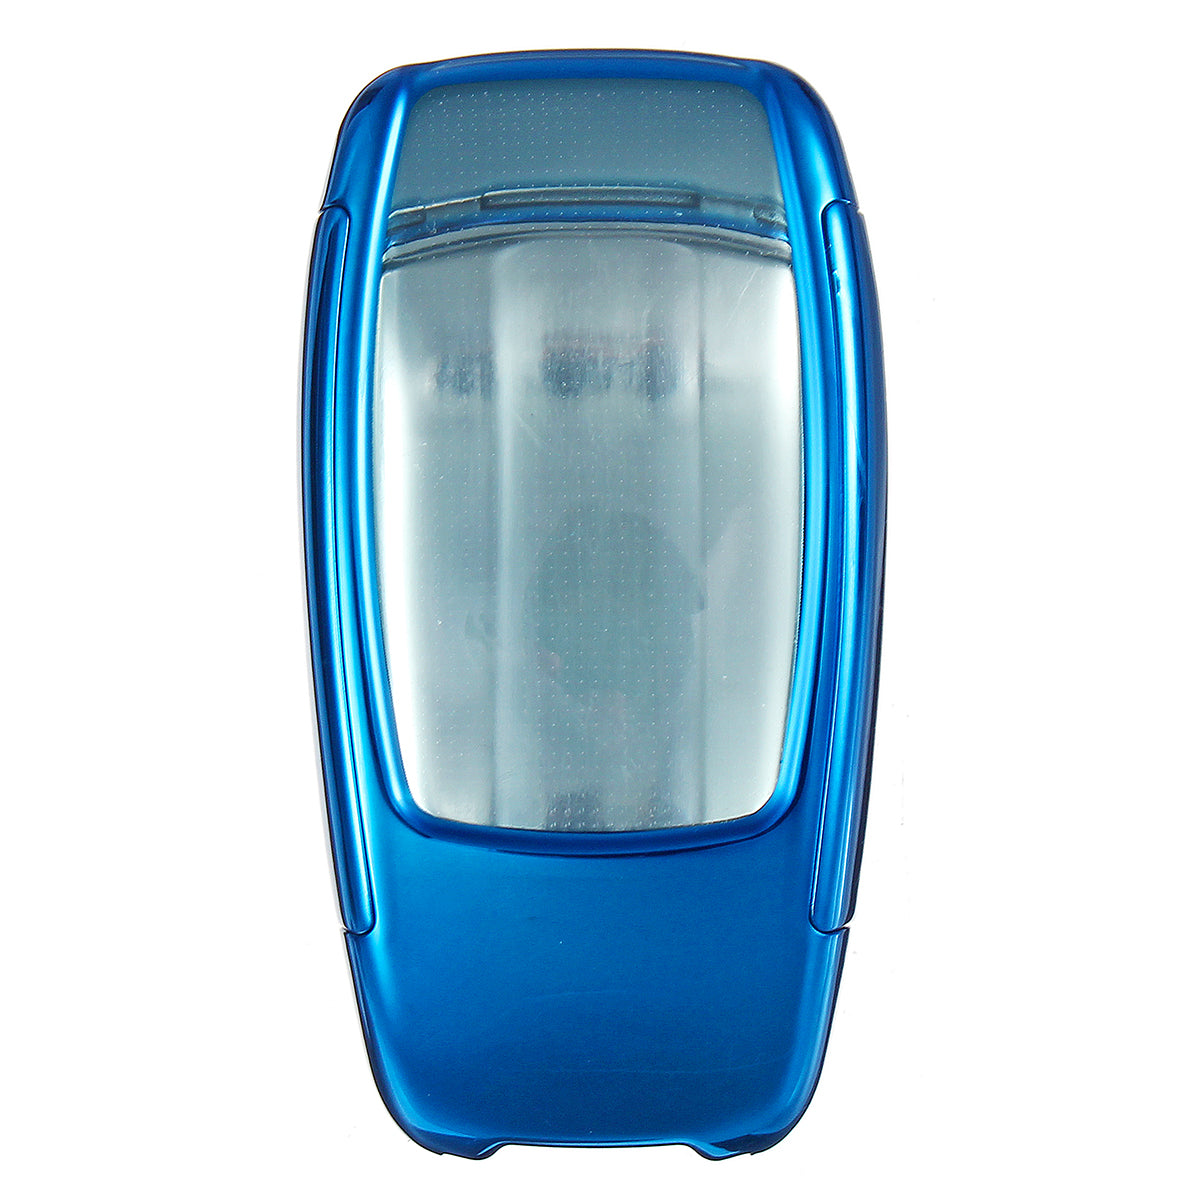 Cadet Blue 2 IN 1 TPU Remote Smart Key Case Cover with Button Film For Benz E/S Class E300 E400 S63 S65